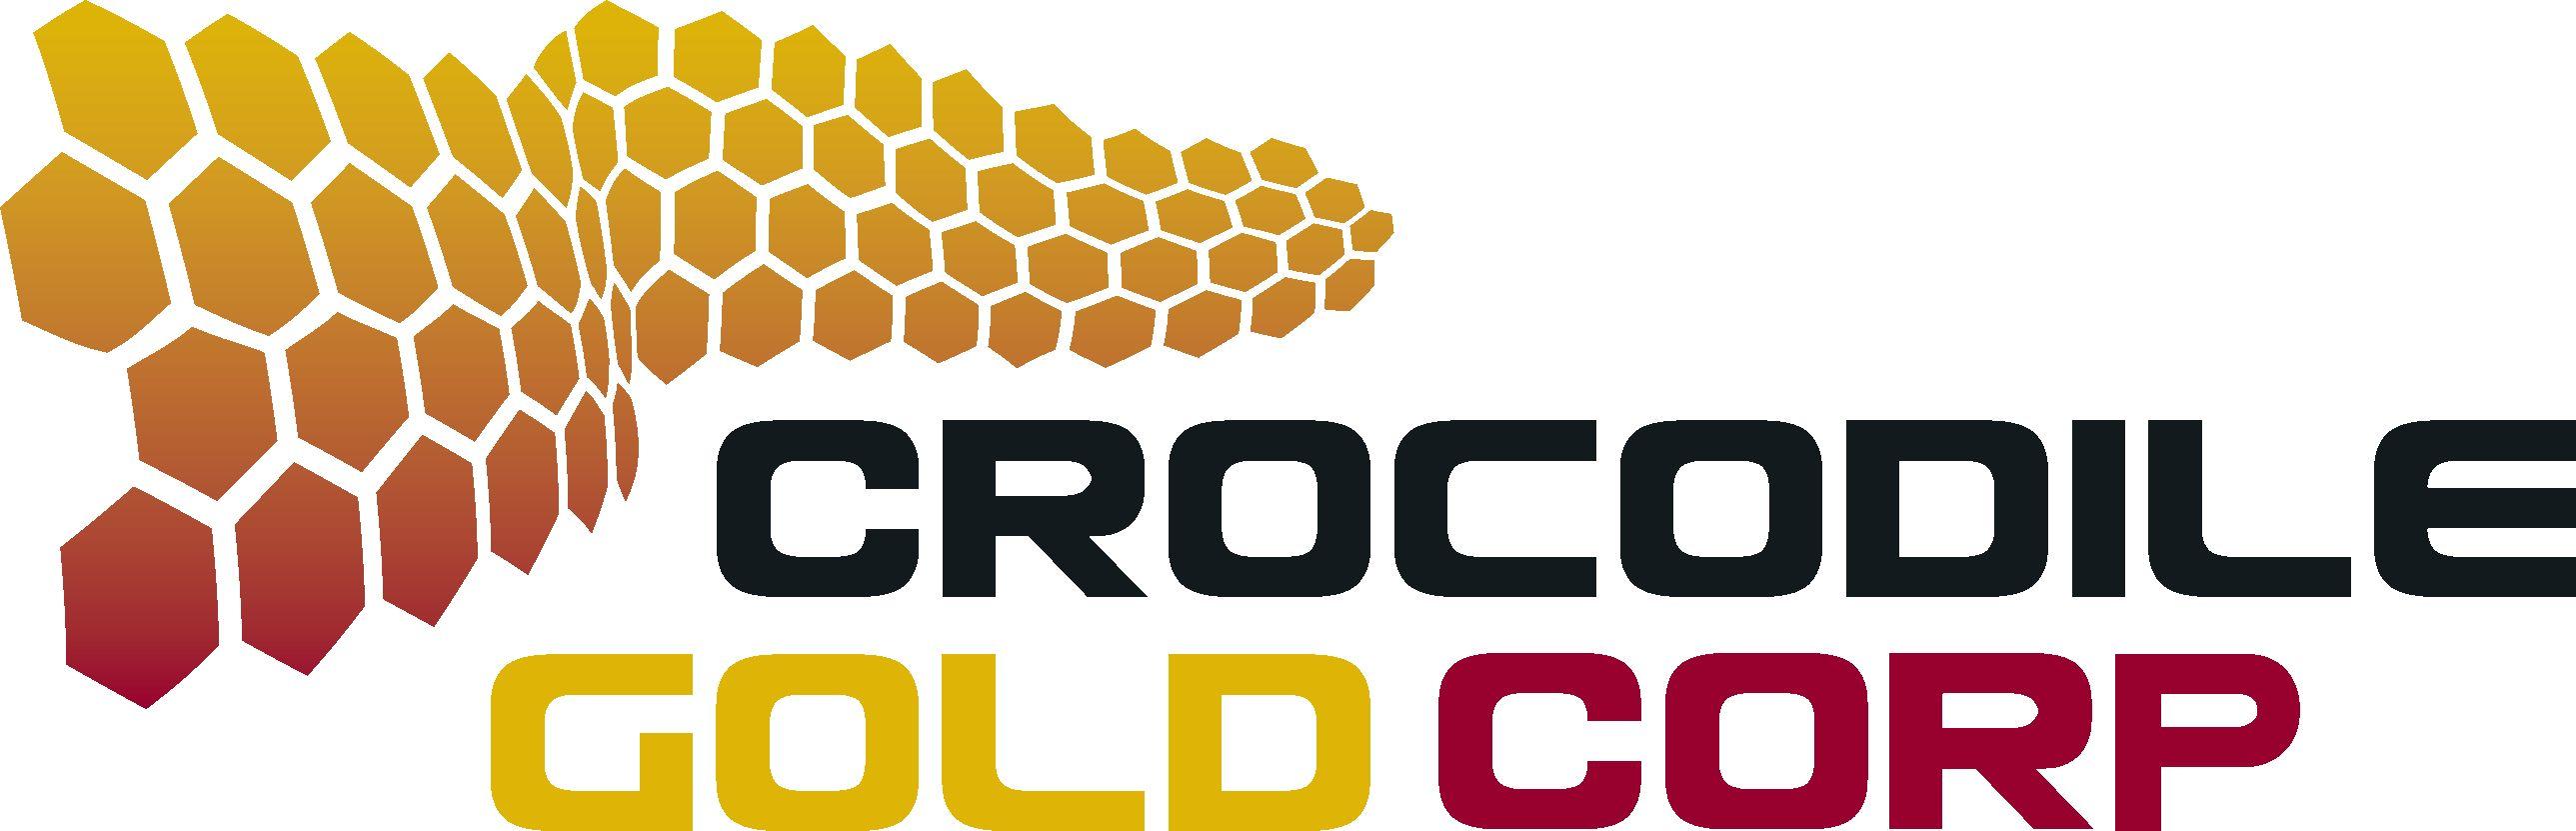 Goldcorp Logo - Crocodile Gold Corp Logo - Stawell Gift